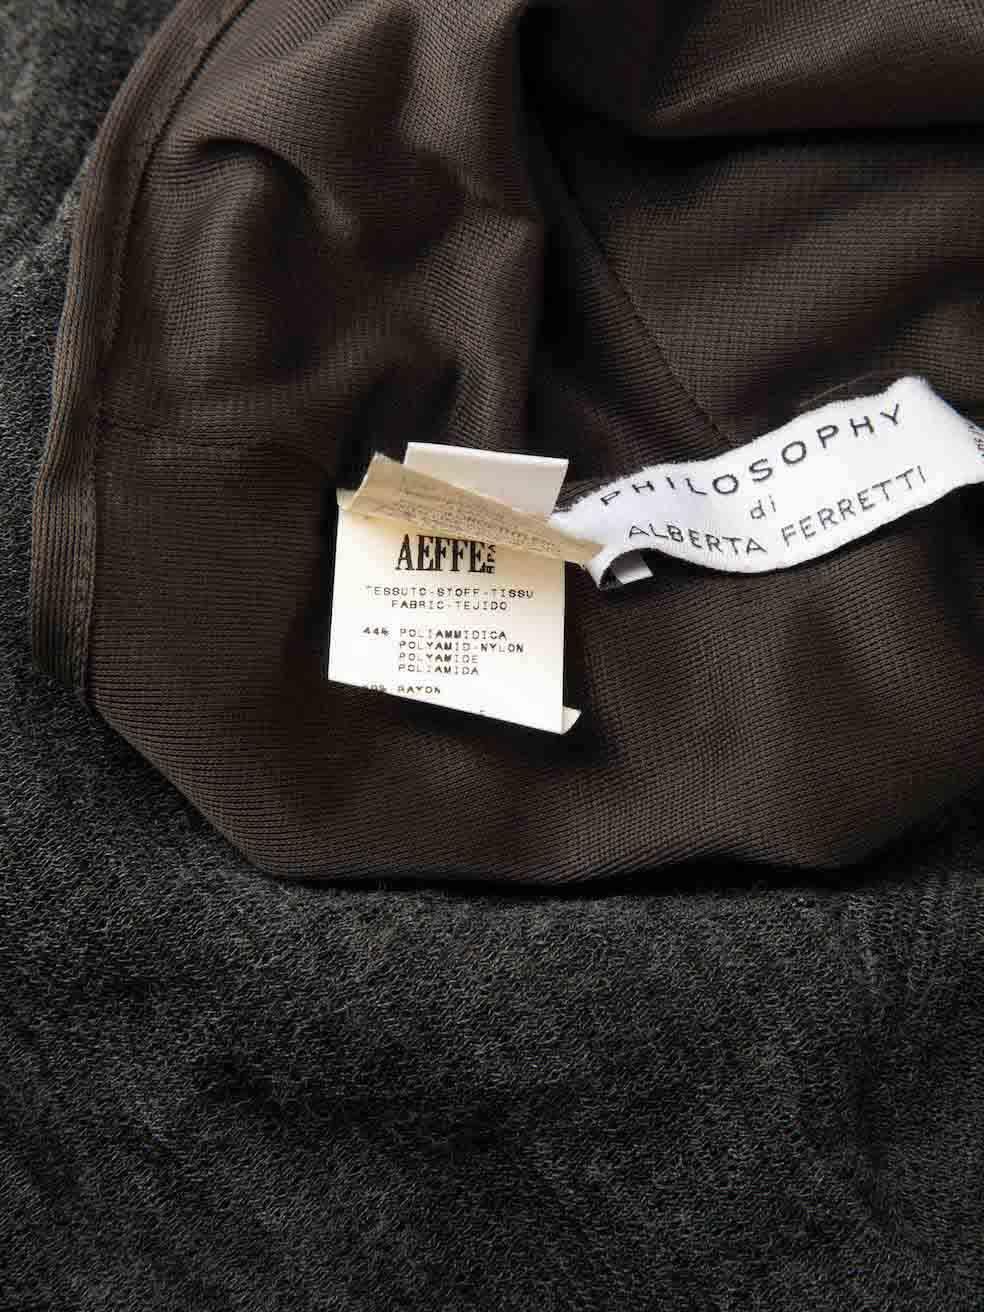 Alberta Ferretti Grey Sheer Maxi Dress Size S For Sale 3